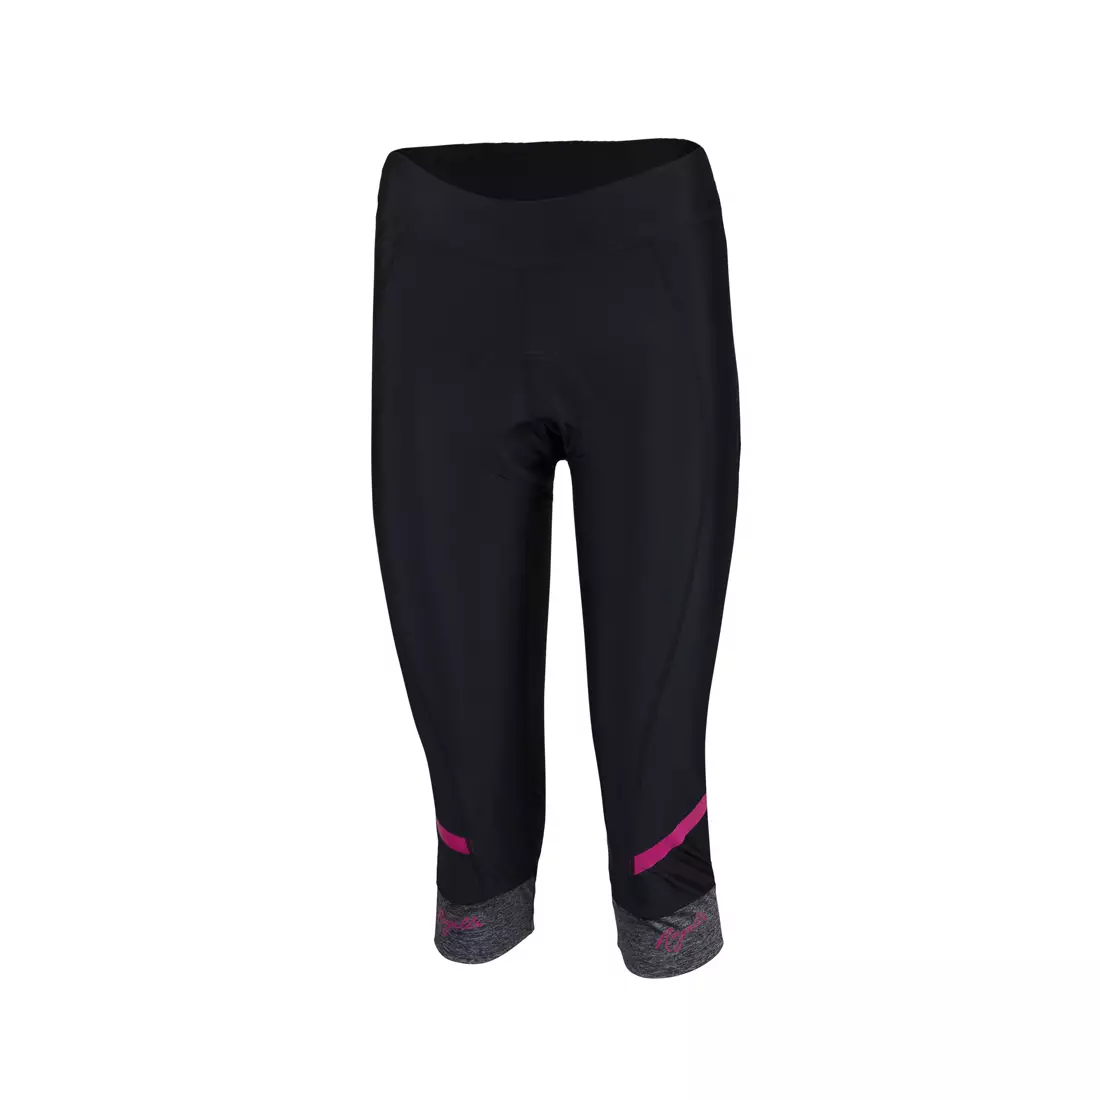 ROGELLI BIKE CAROU 2.0 010.238 women's shorts 3/4 black-gray-pink